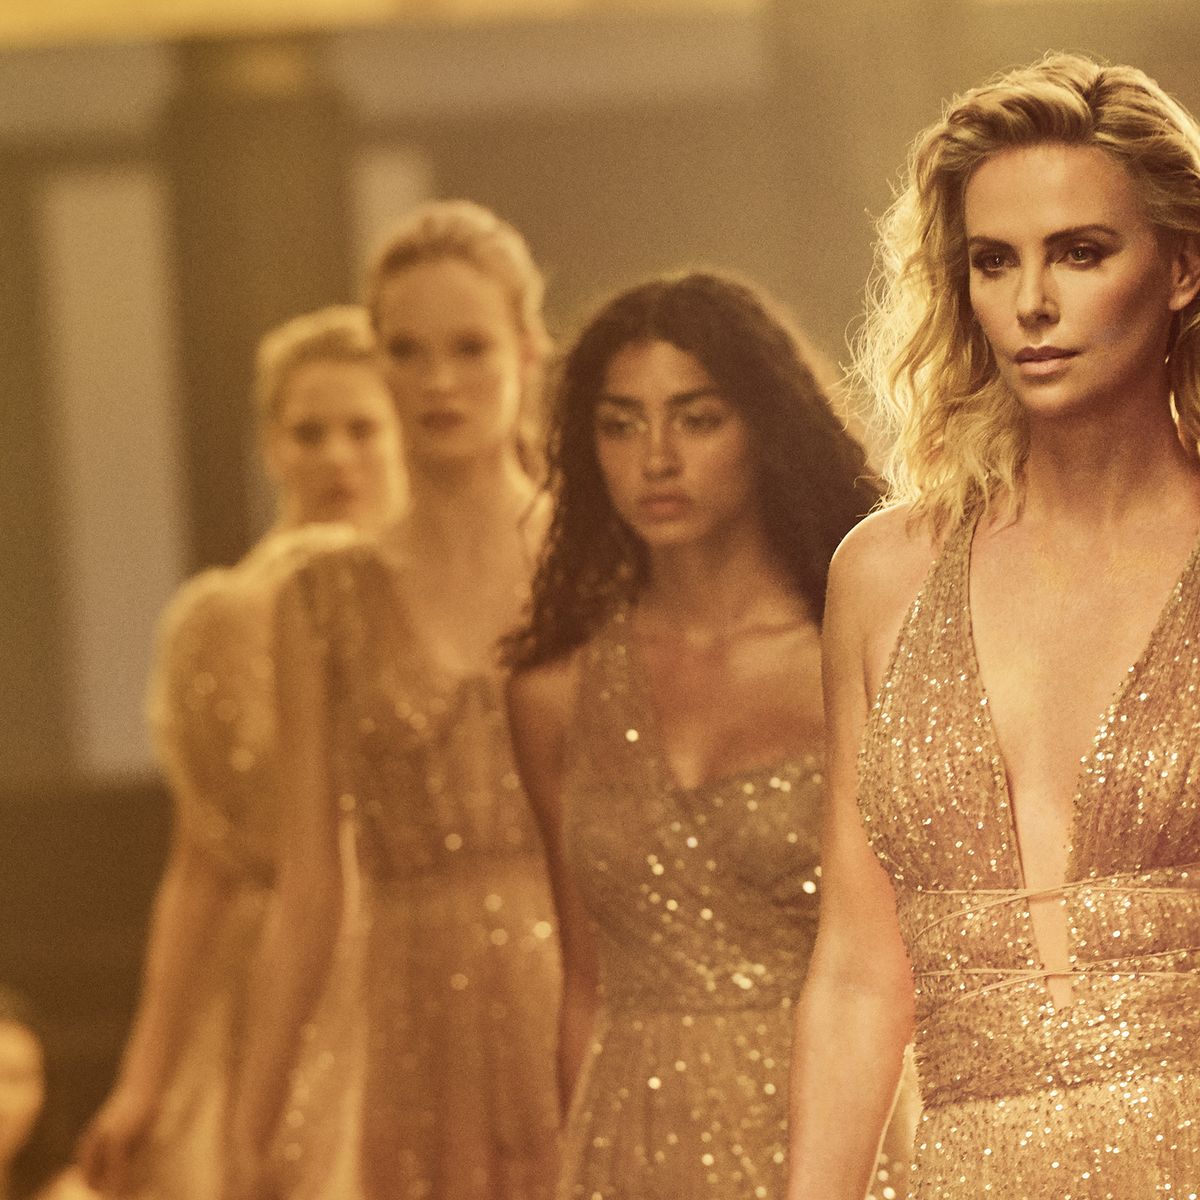 Dior J'adore: The Future Is Gold (Video 2014) - IMDb